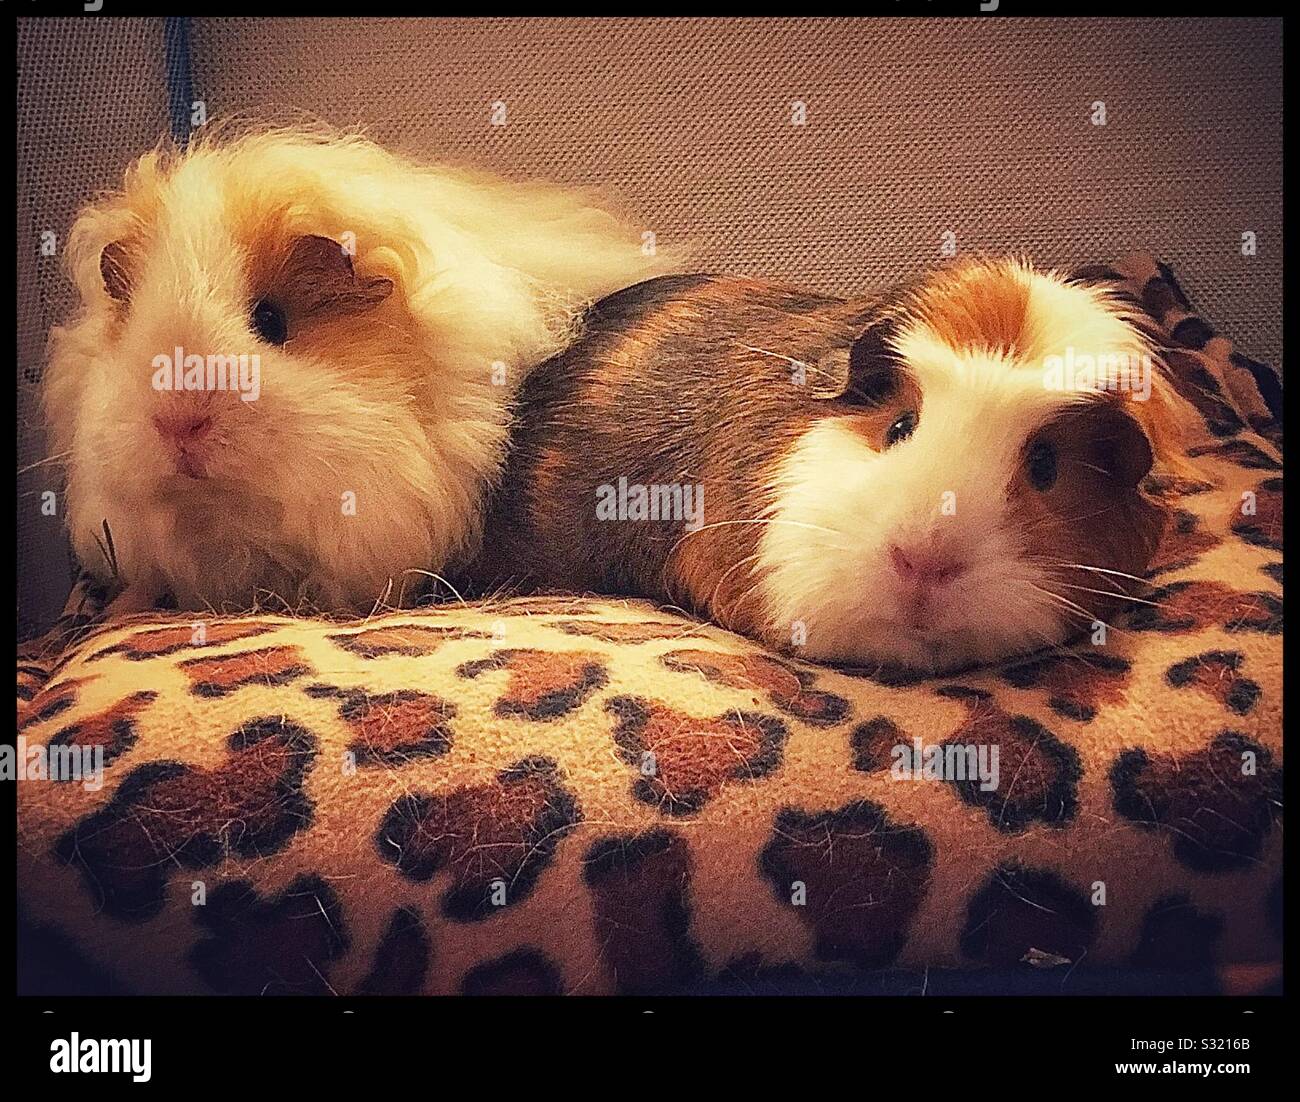 Guinea pigs on an animal cushion Stock Photo